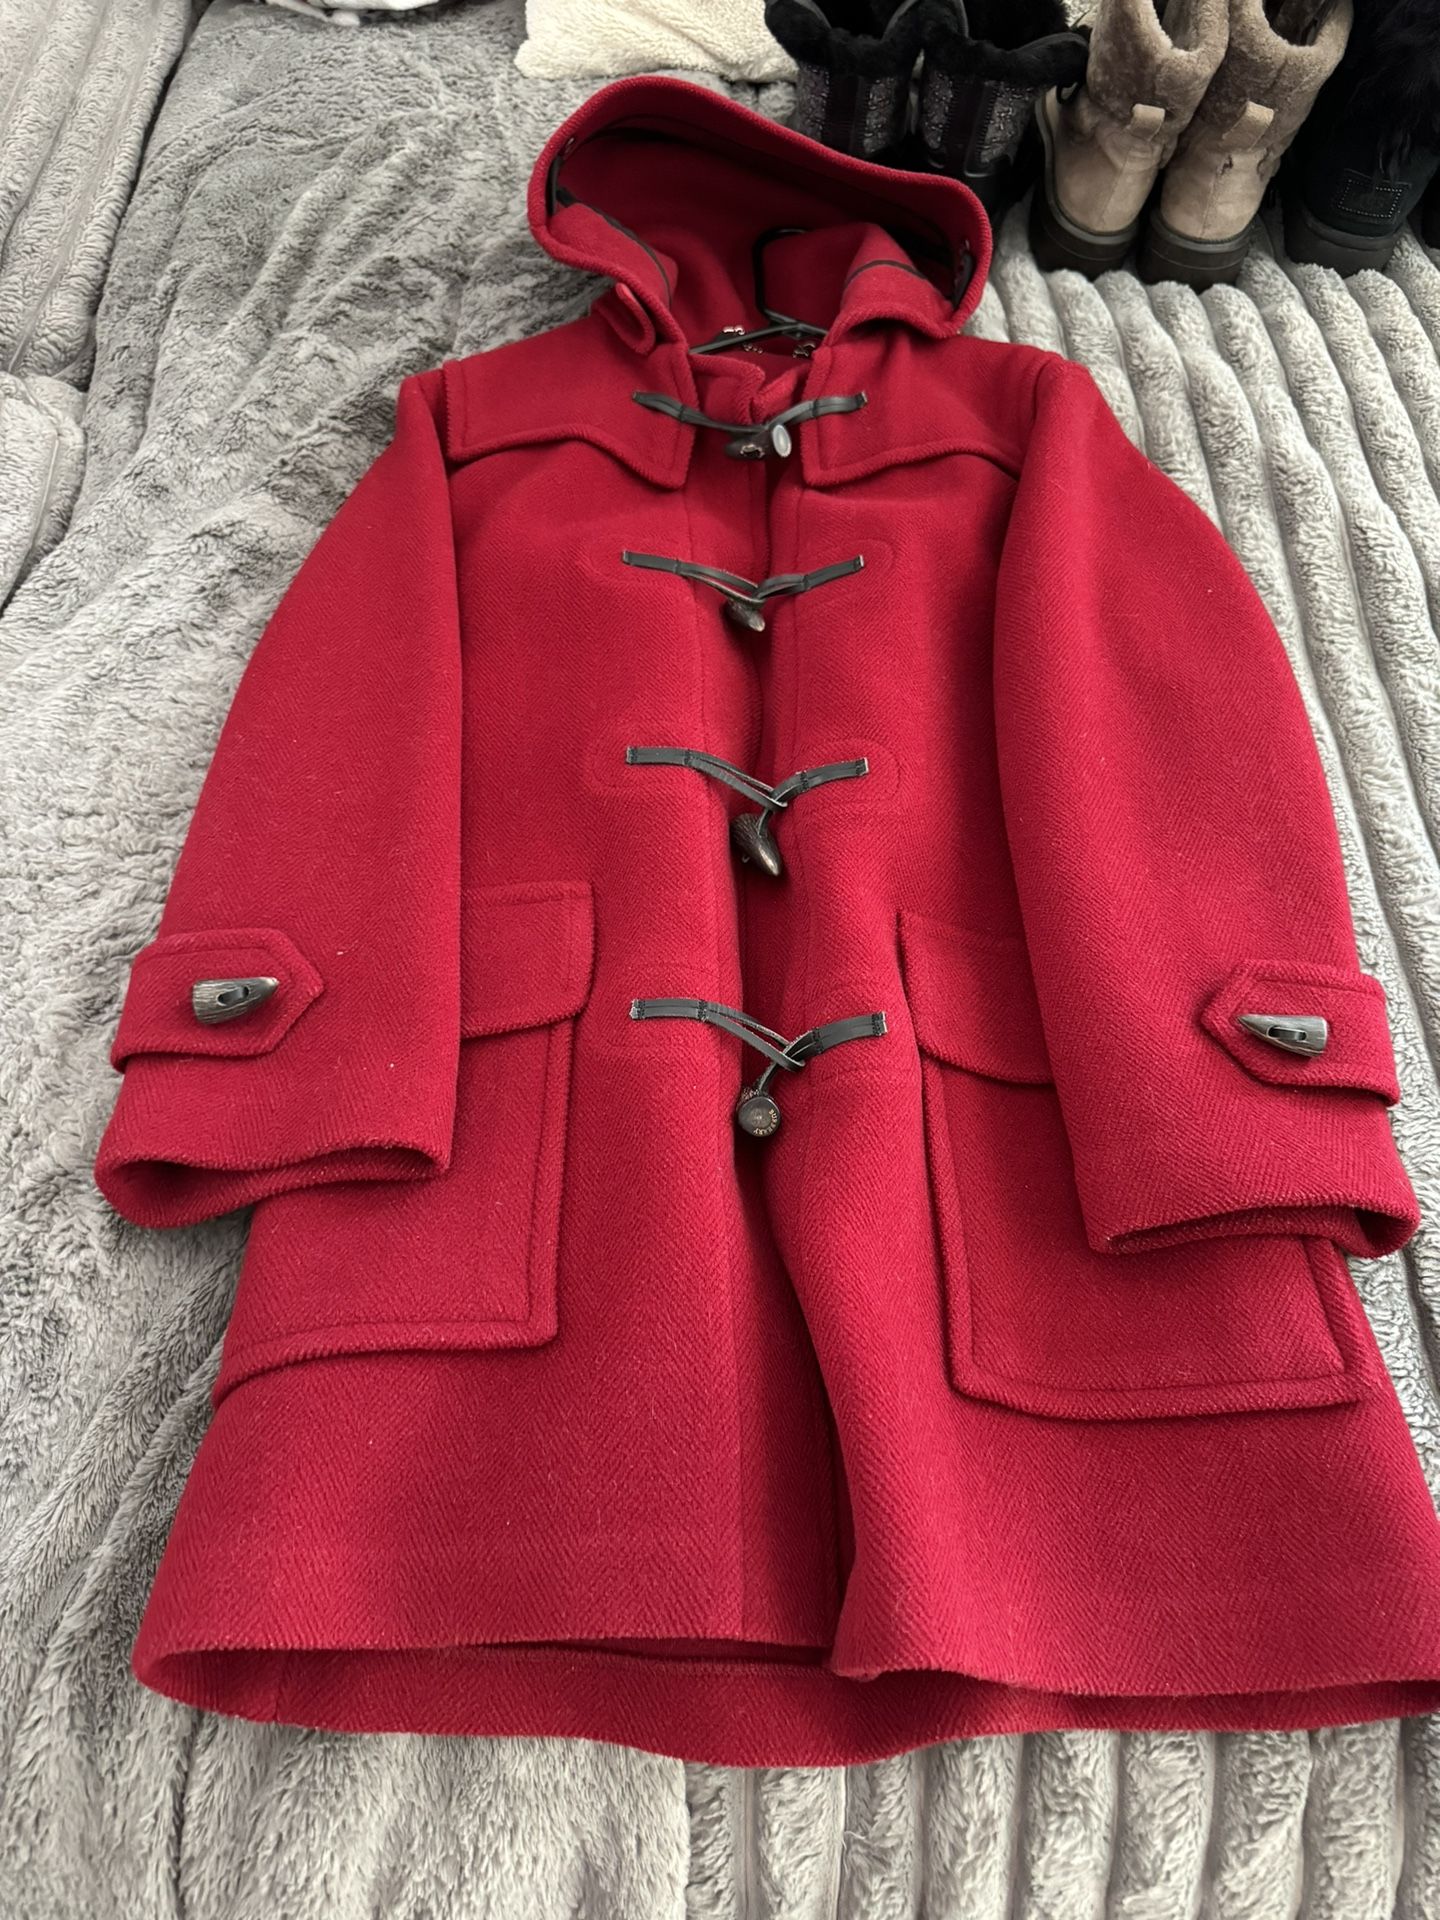 Burberry Red Duffle Coat